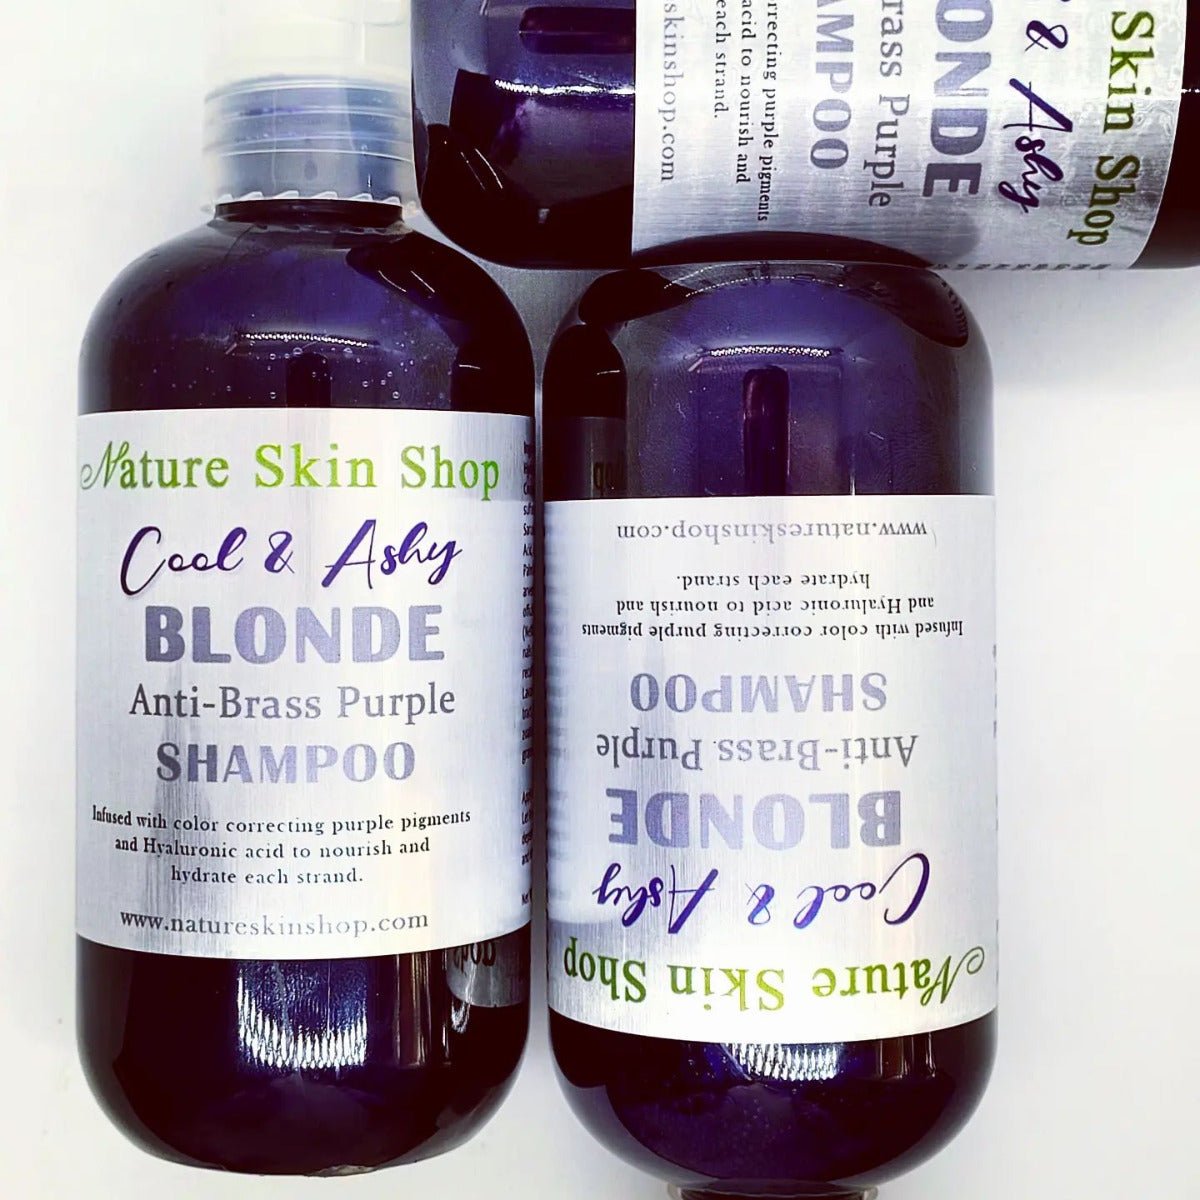 Cool & Ashy Blonde Anti-Brass Purple Shampoo - Nature Skin Shop